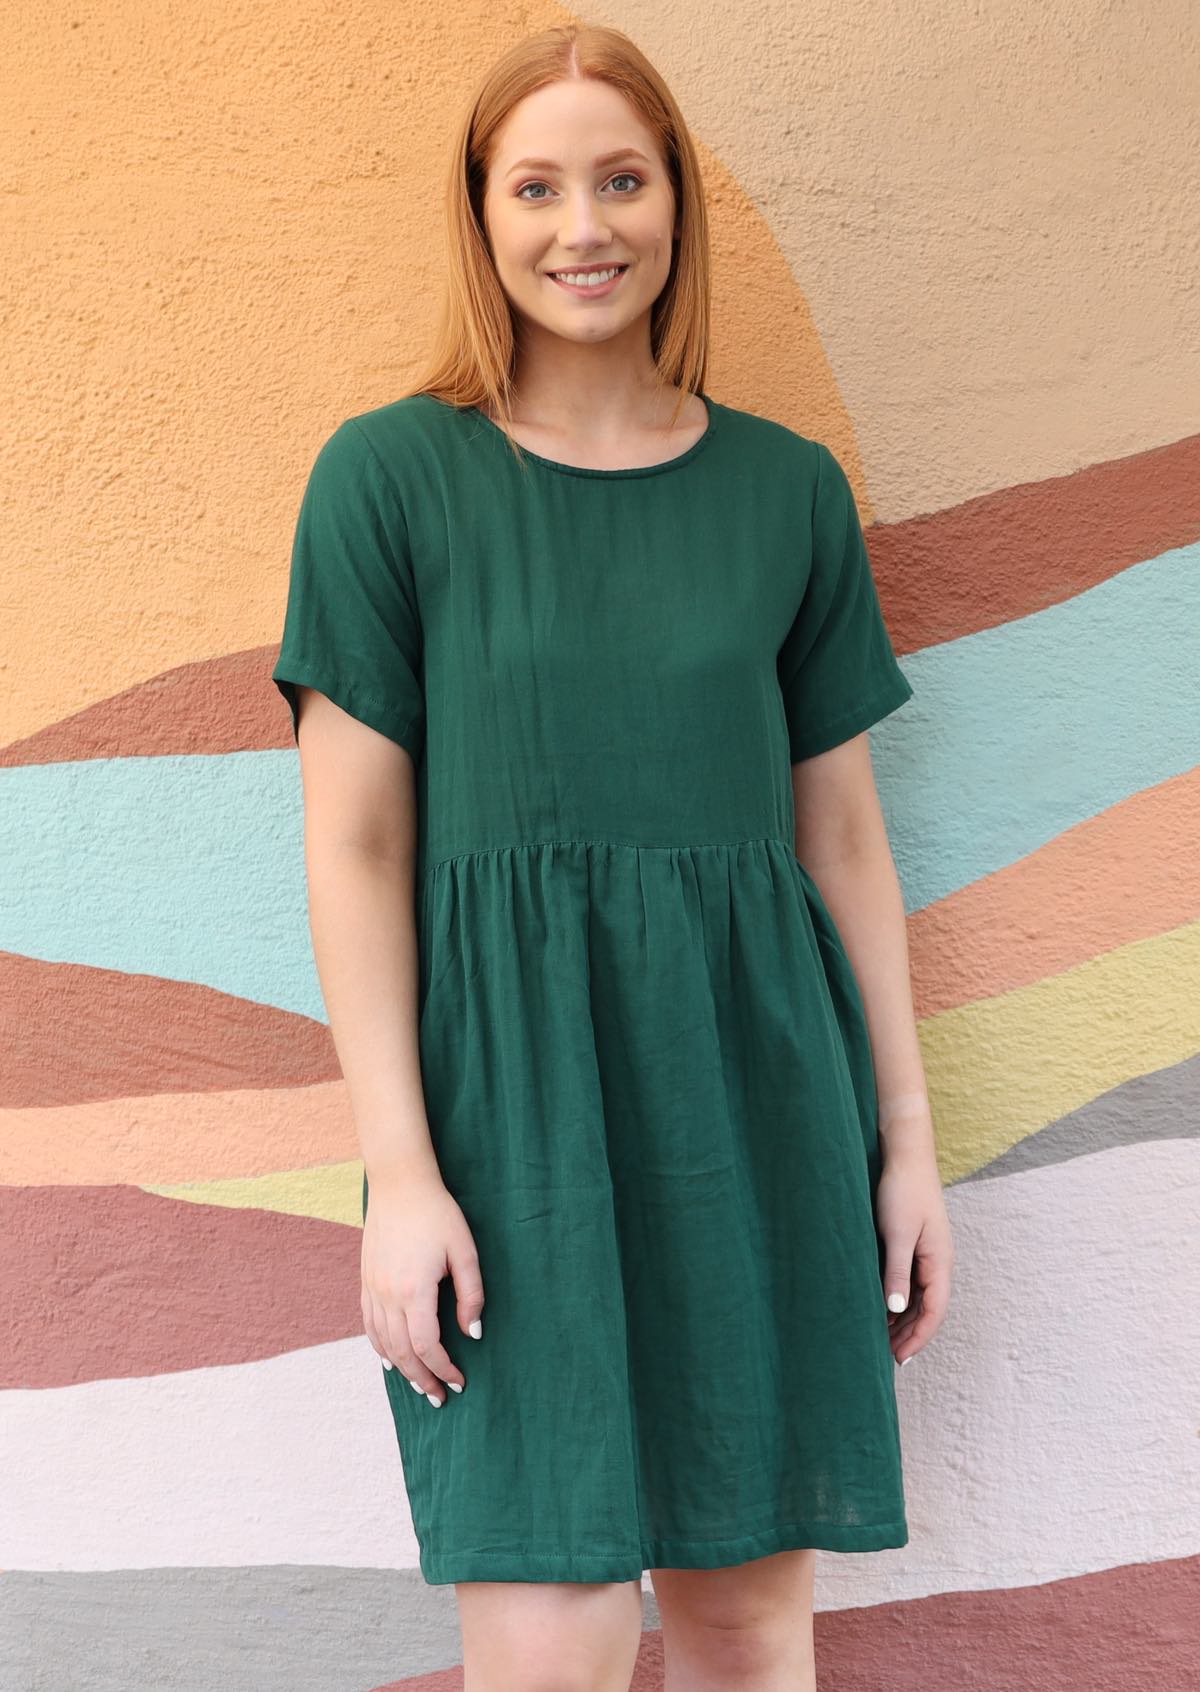 model standing with green dress short sleeves oranger hair